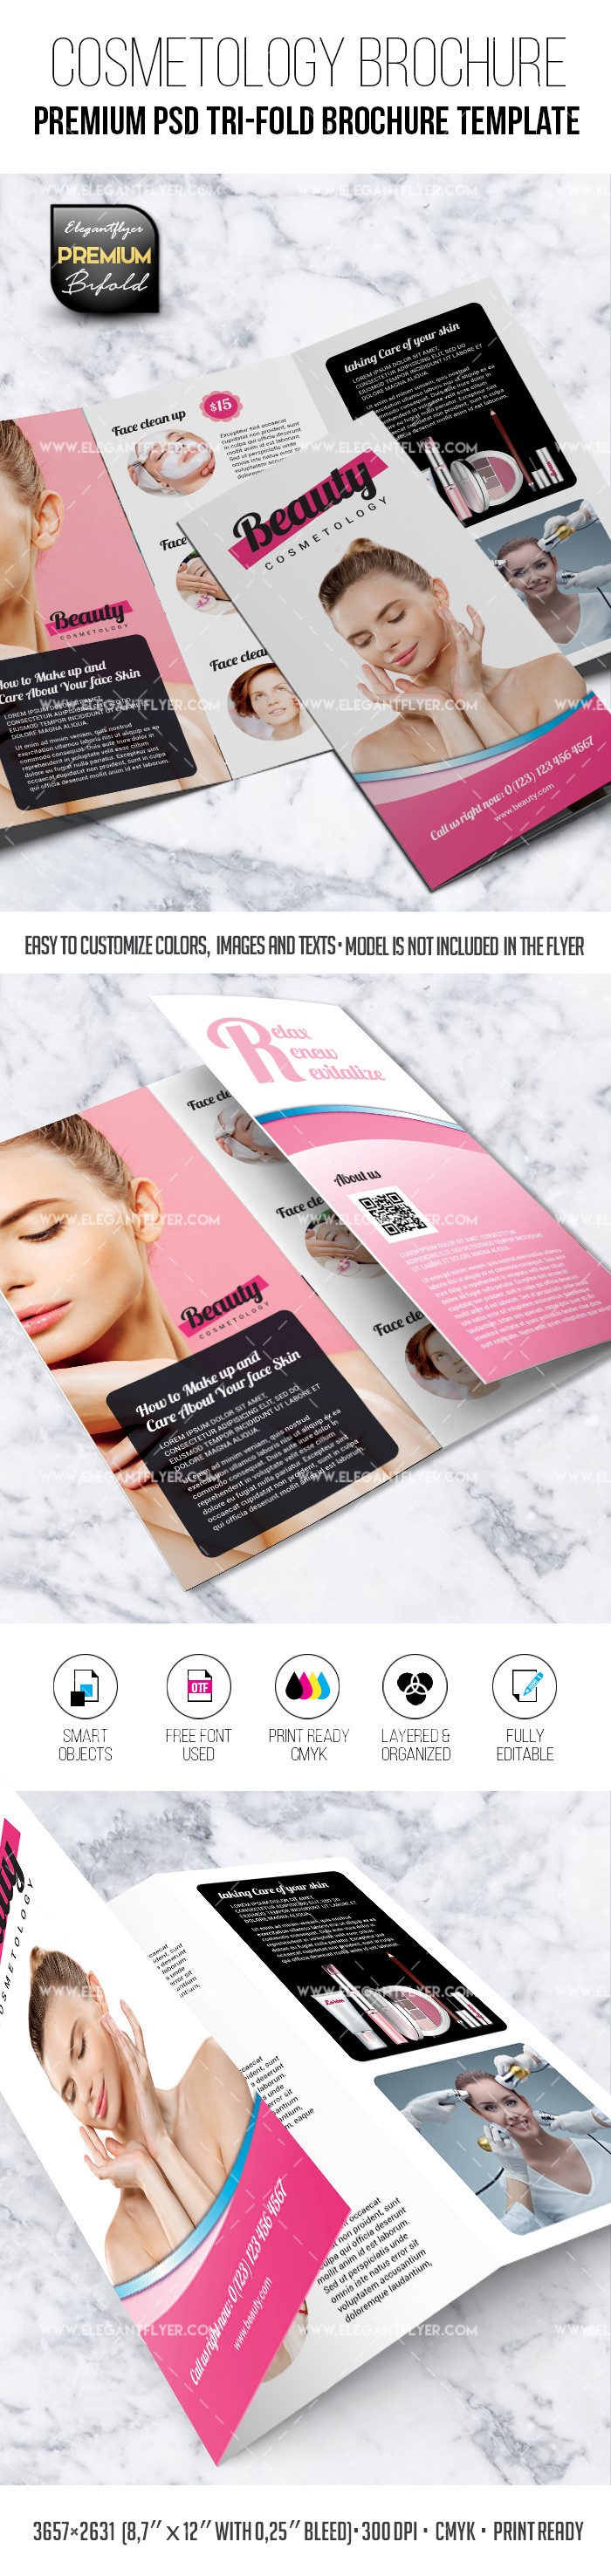 Brochure Trisgolta di Cosmetologia by ElegantFlyer